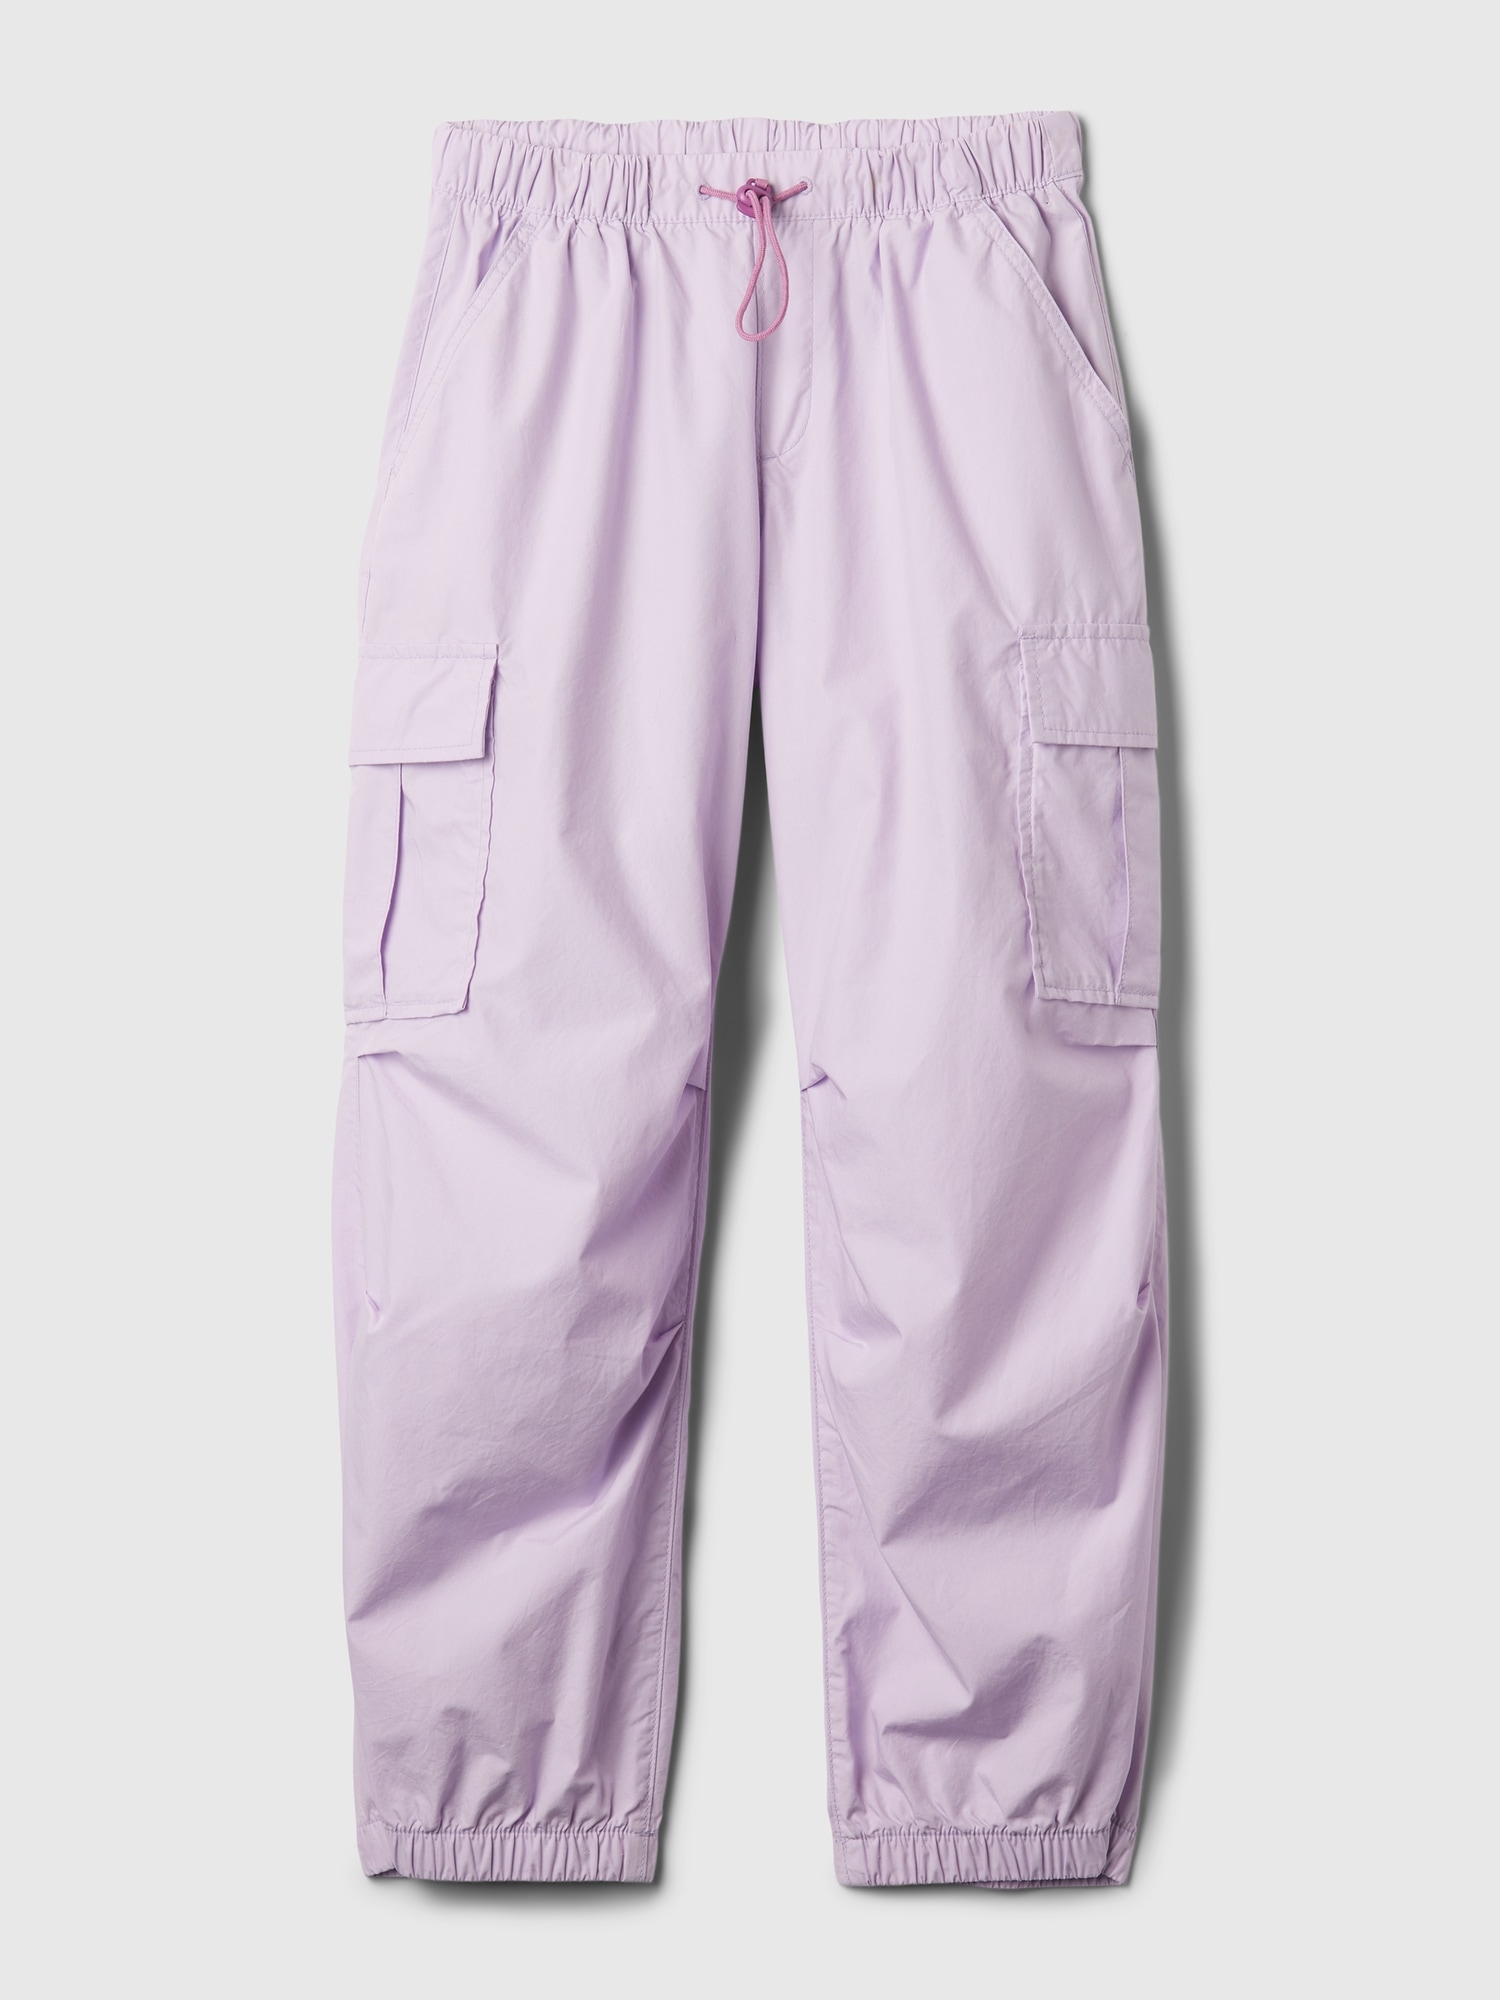 Girl Crush Parachute Pant - Pink